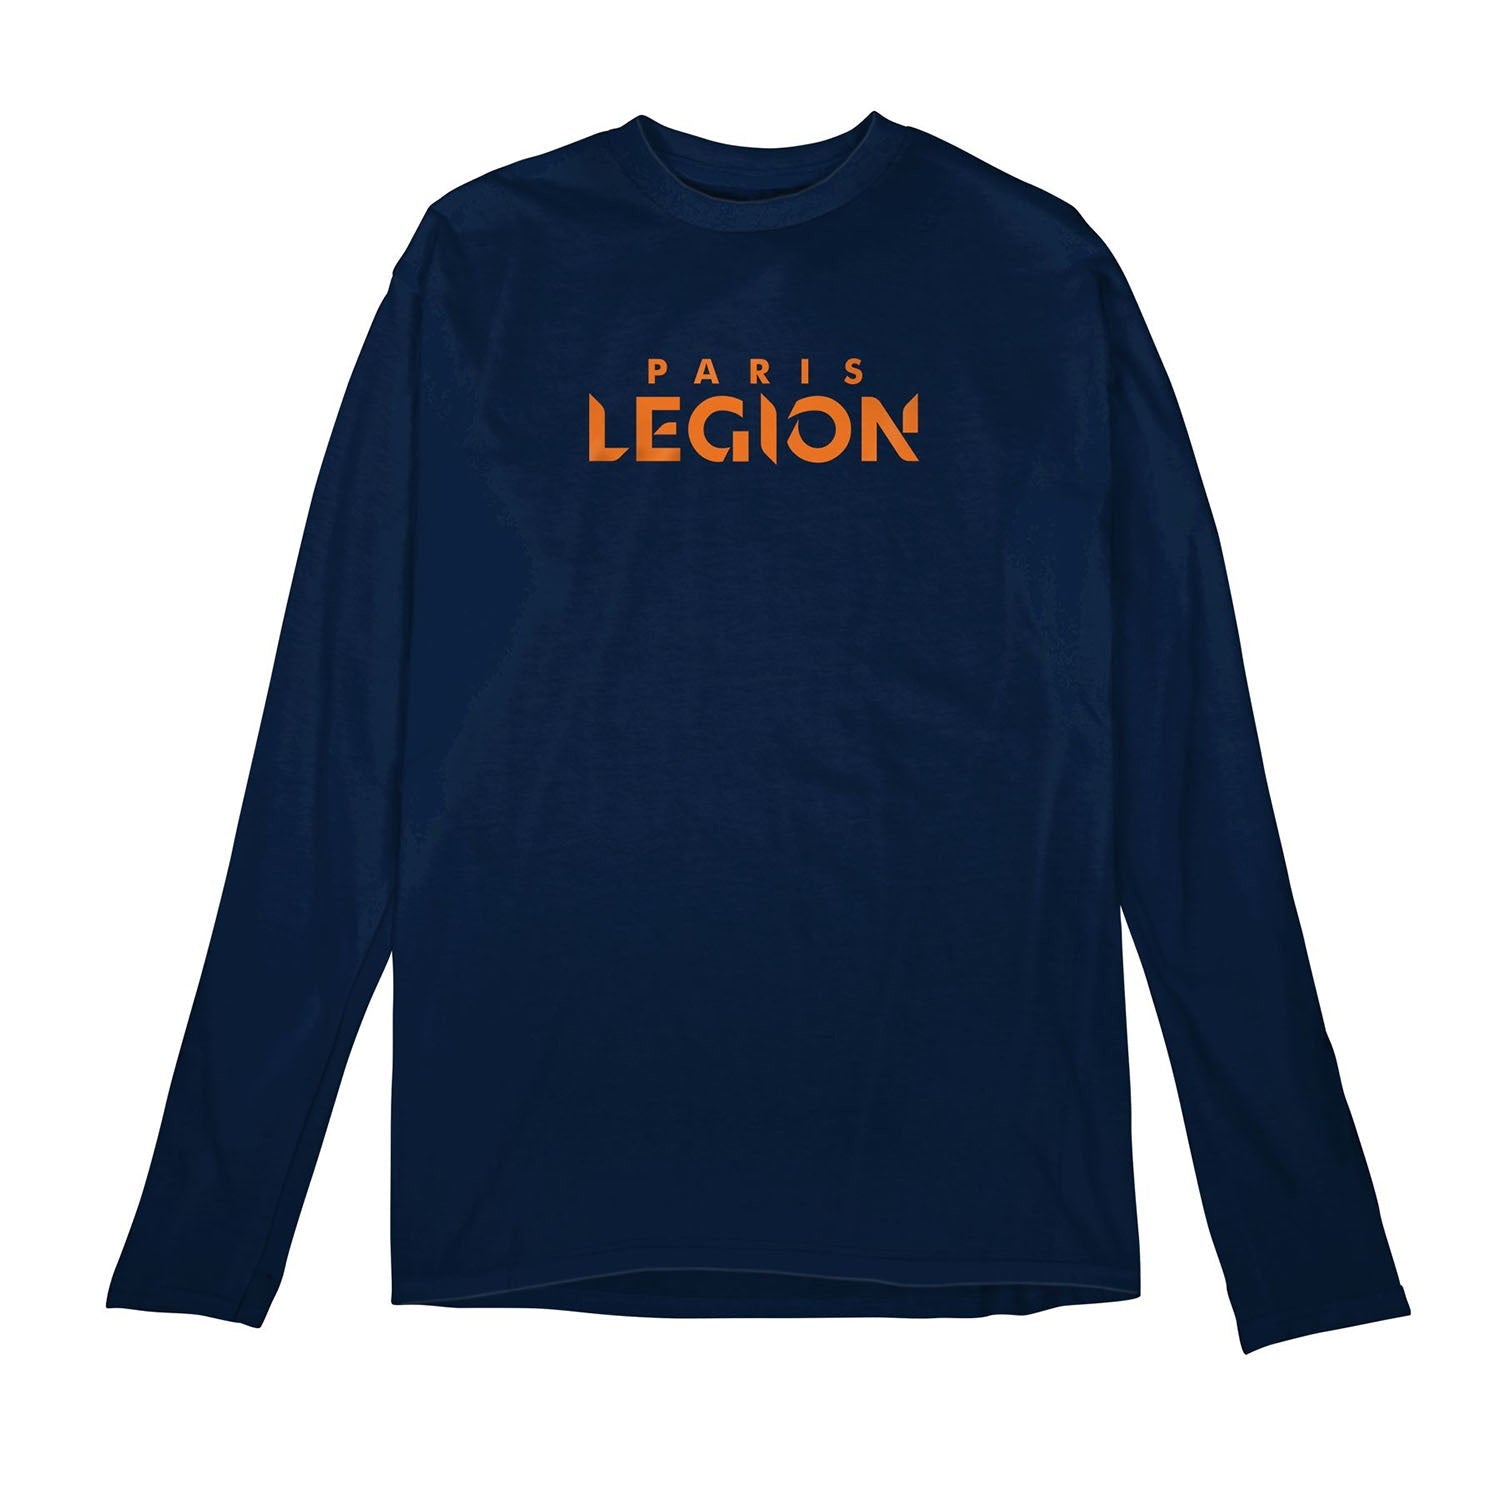 Paris Legion Navy Signature Logo Long Sleeve T-Shirt - Front View